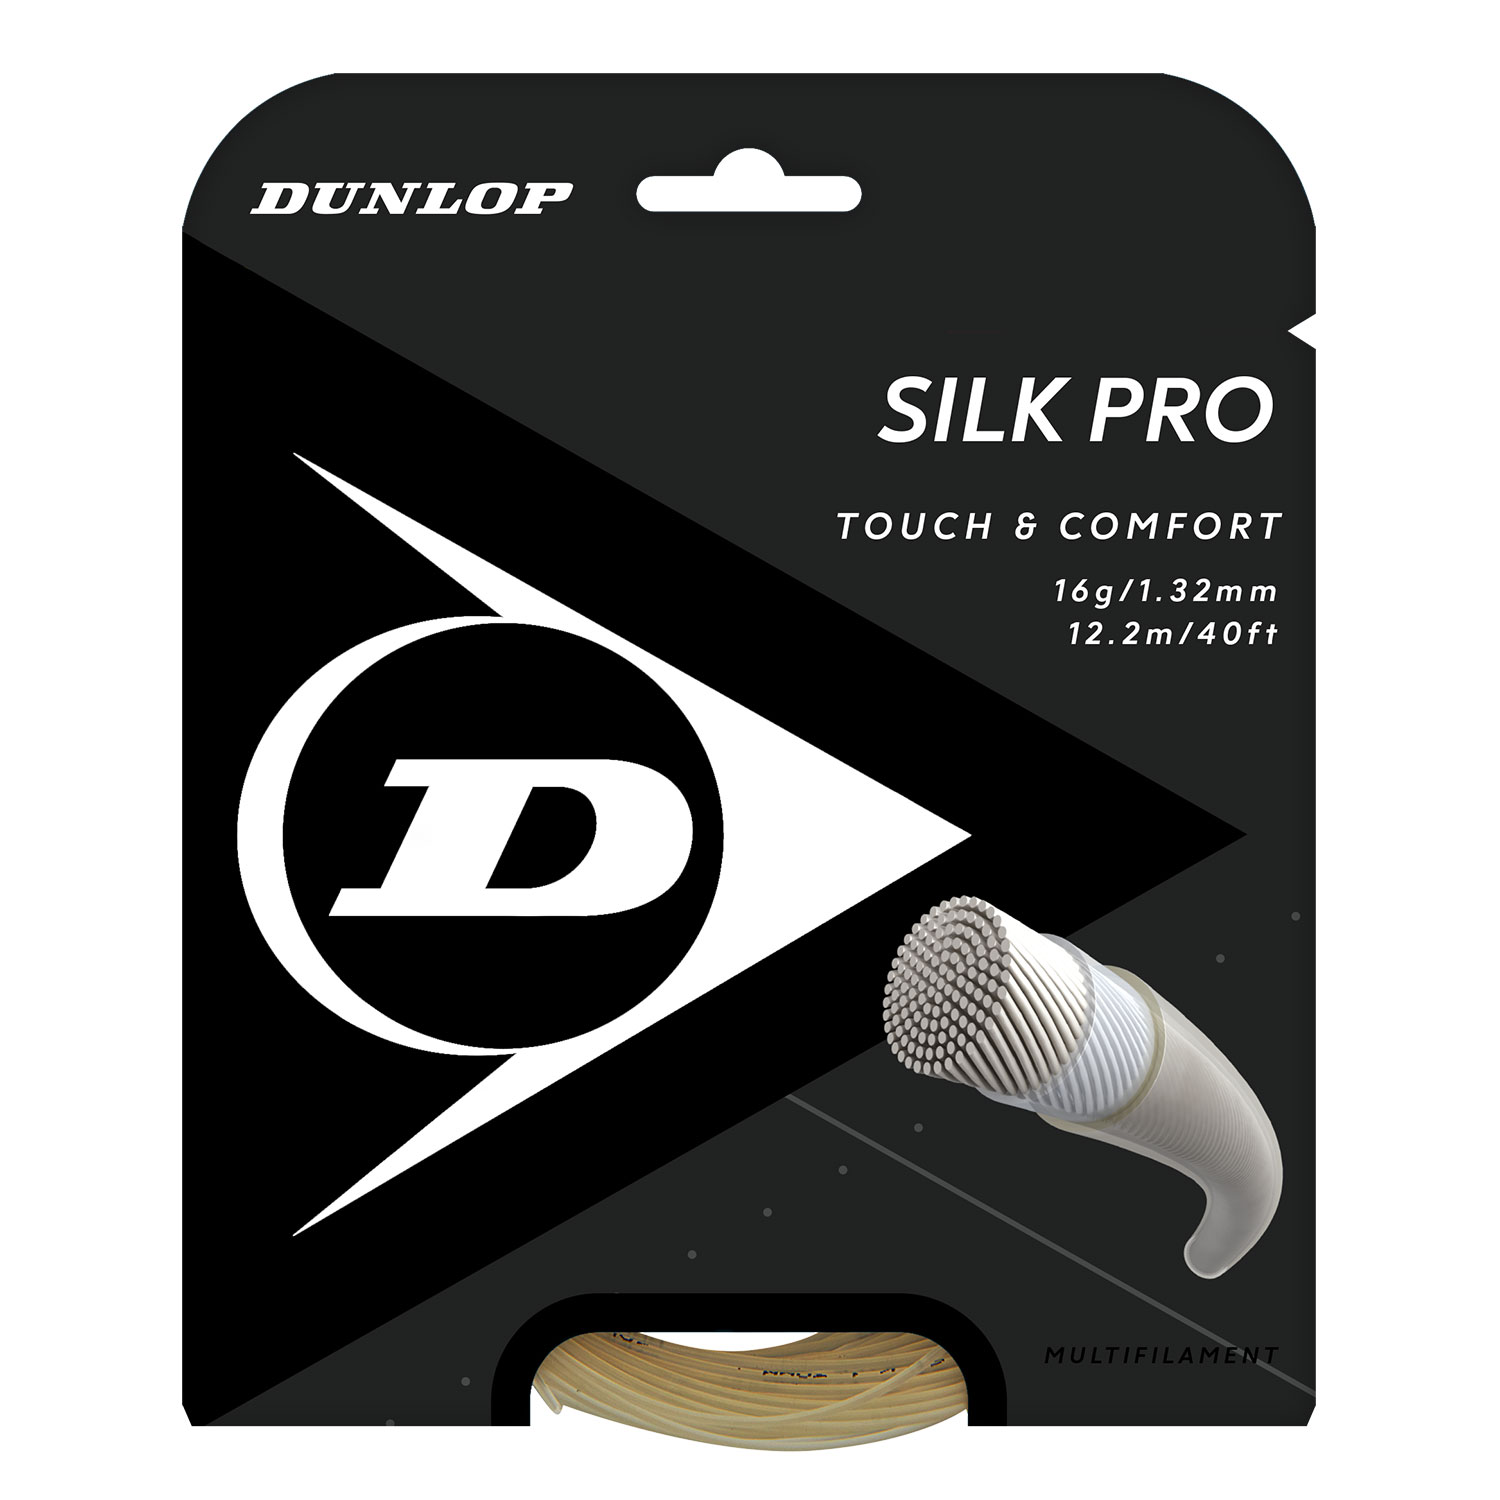 Dunlop Silk Pro 1.32 Corde da Tennis Multifilamento